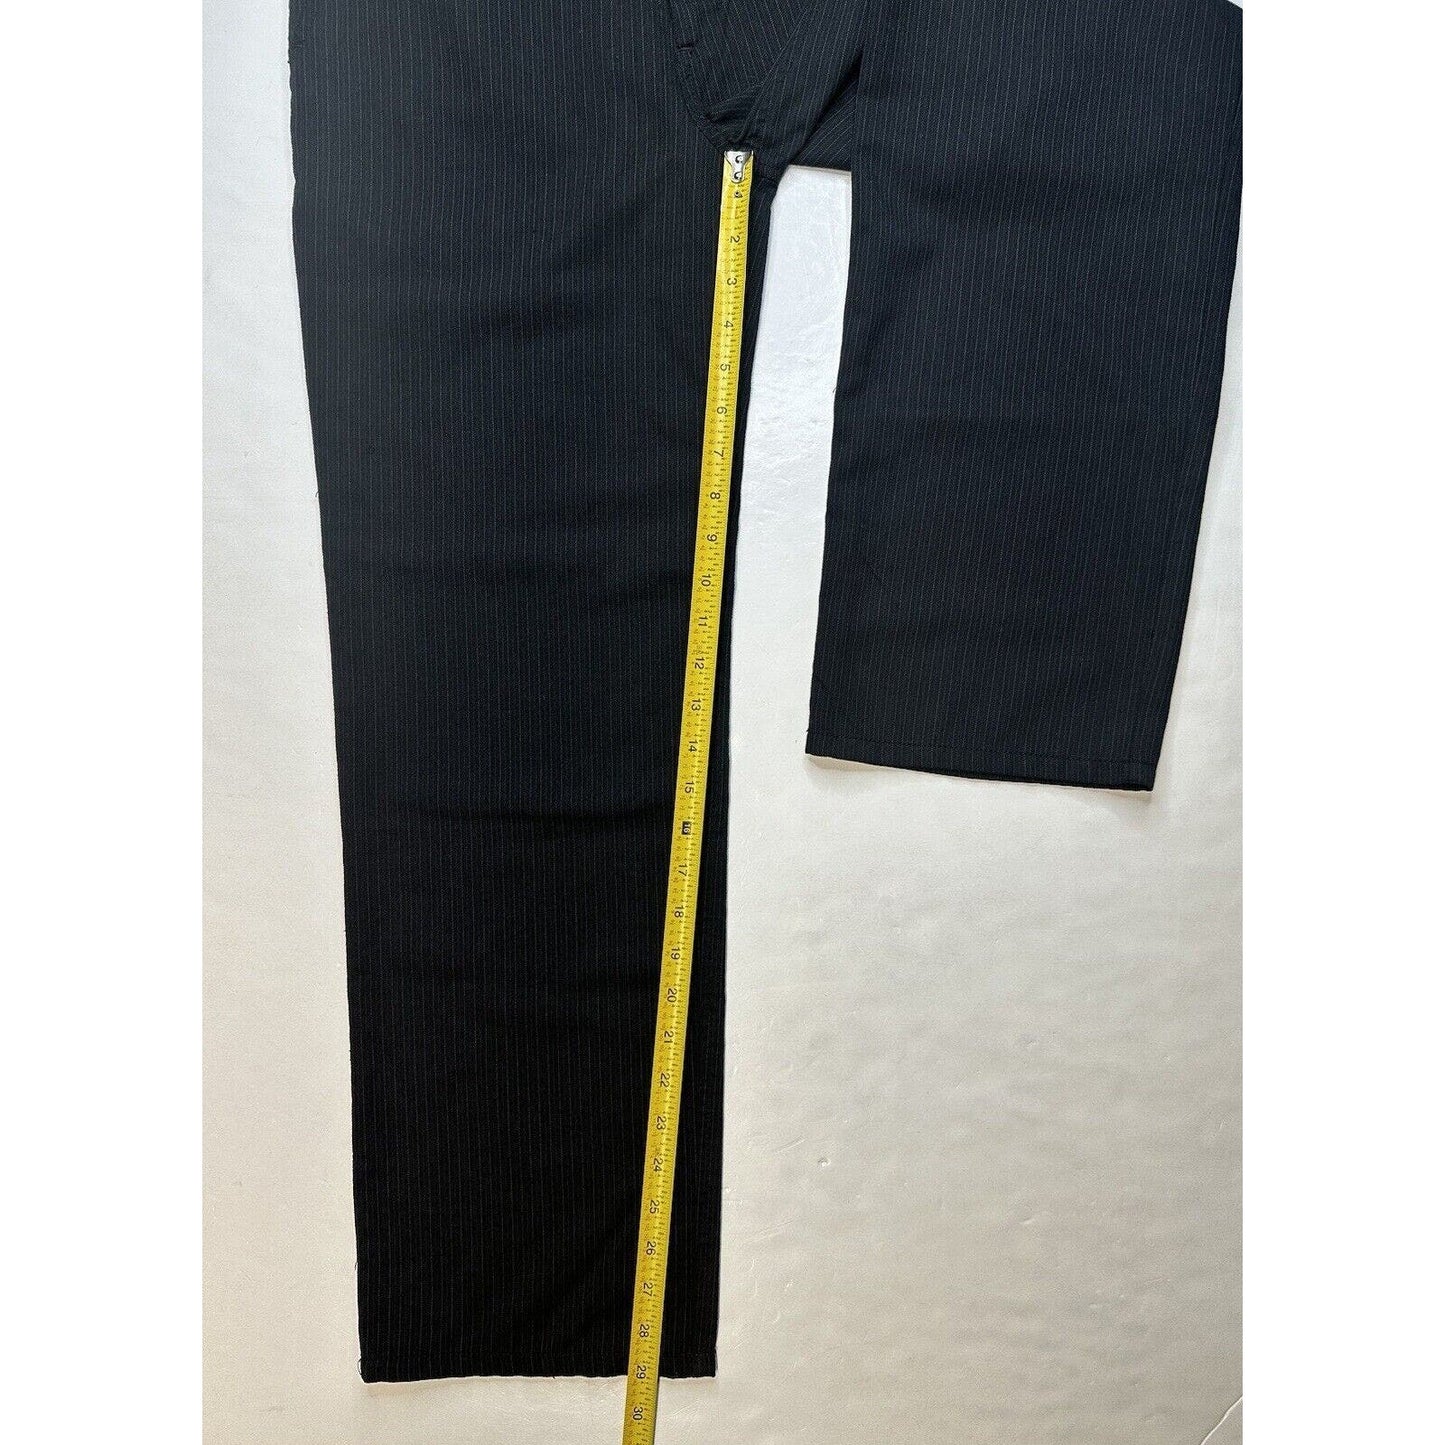 Billabong Pants 29 Straight Leg Trouser High Rise Black Pinstripe Preppy Y2K